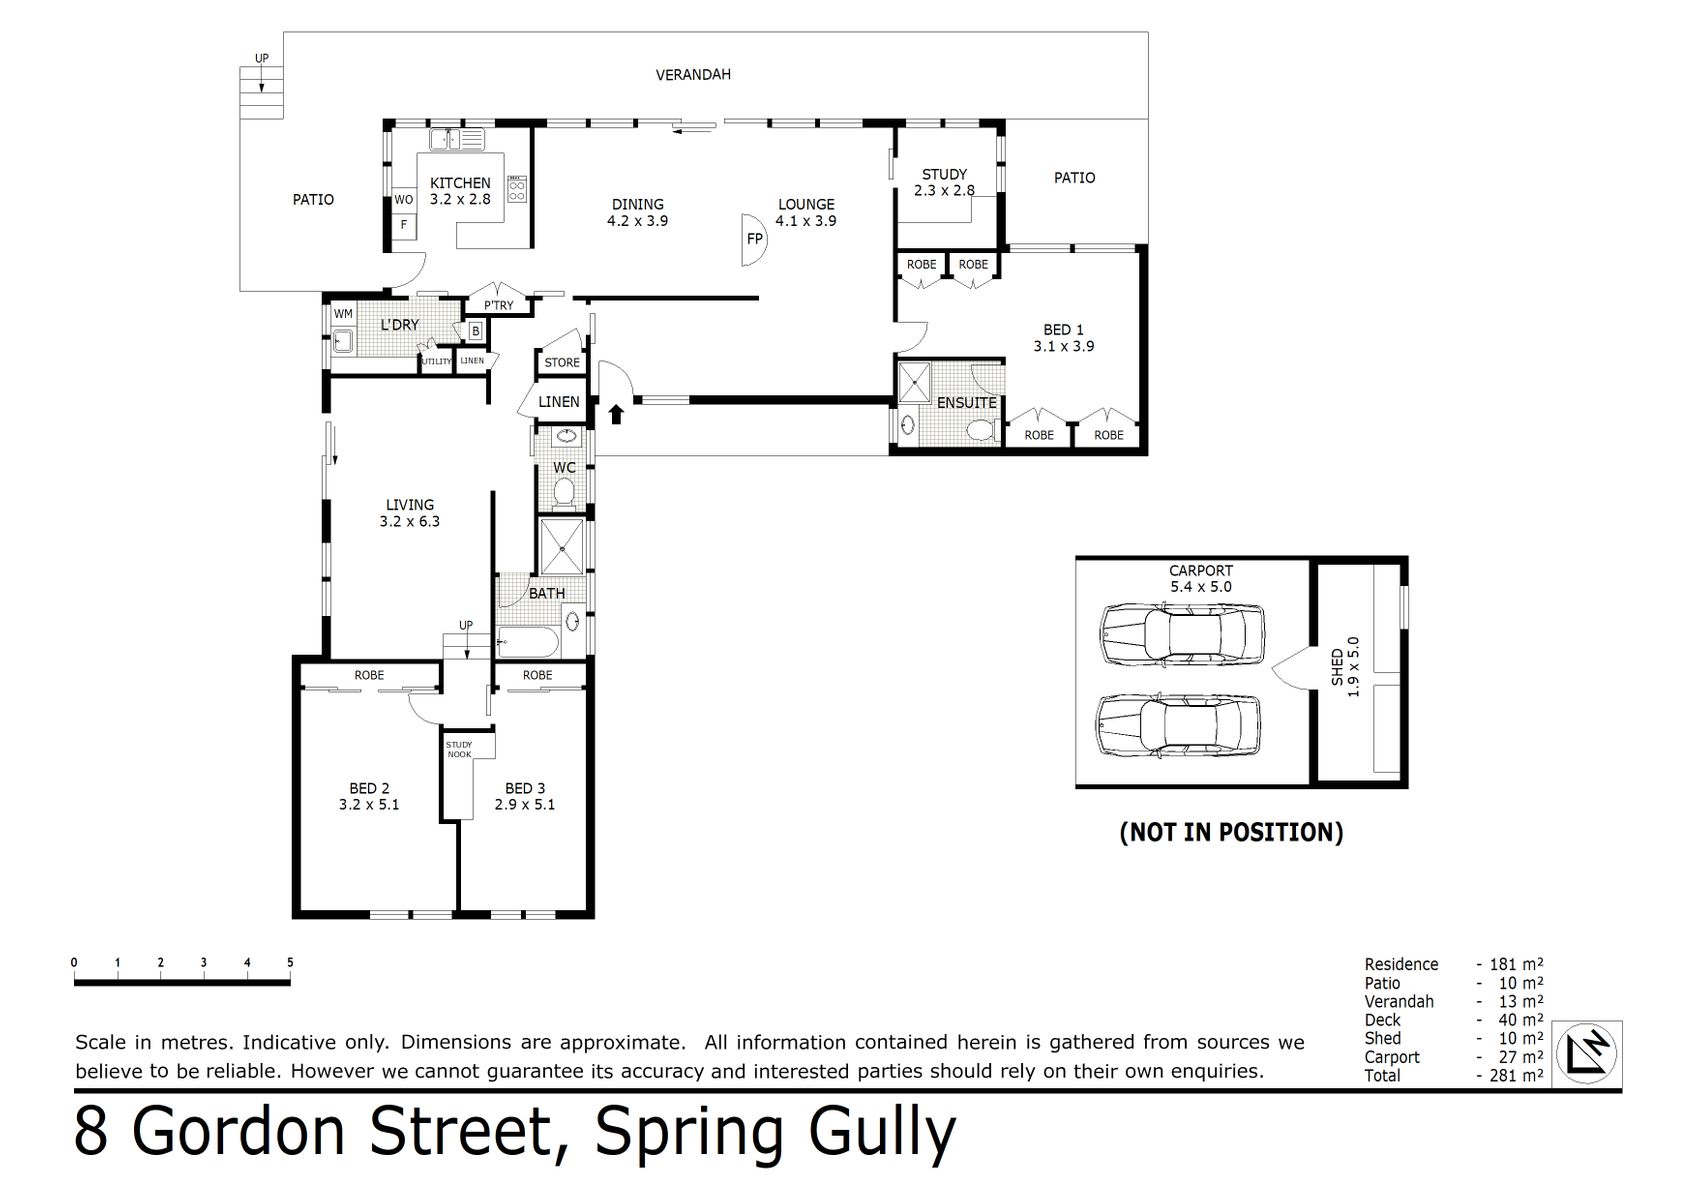 8 Gordon Street Spring Gully ( 28 AUG 2020 ) 181sqm